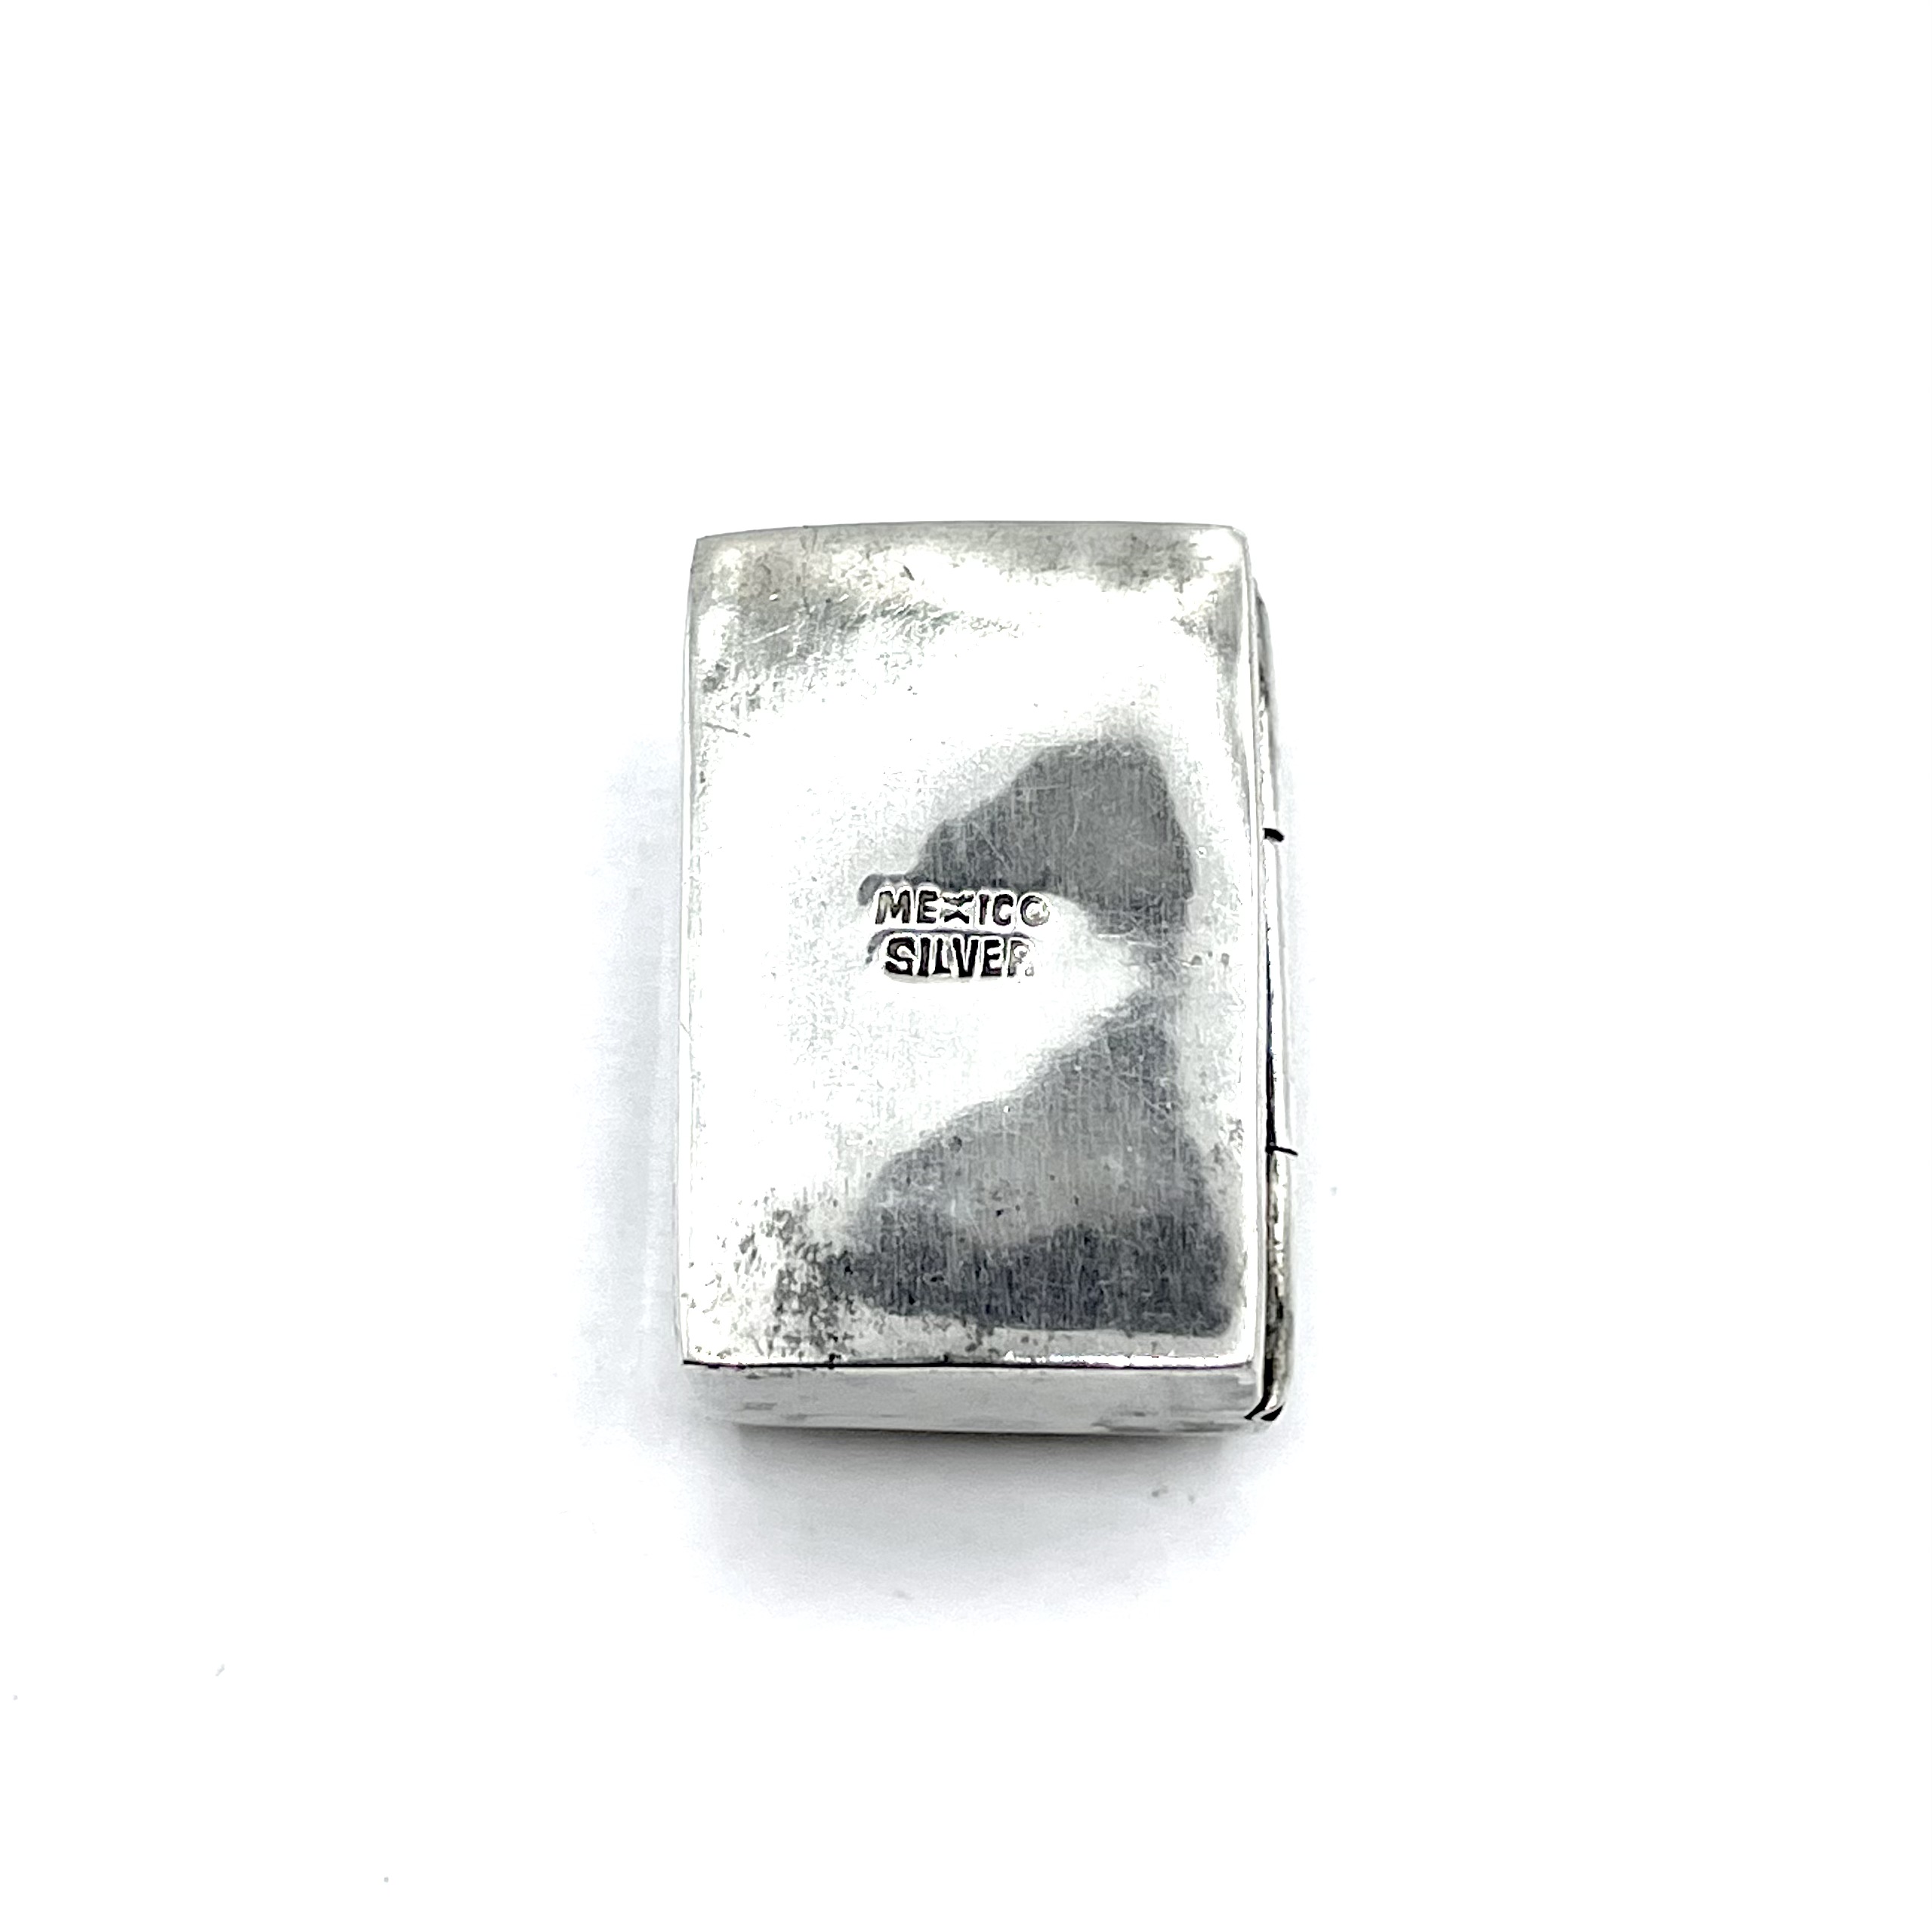 Sterling silver pill box